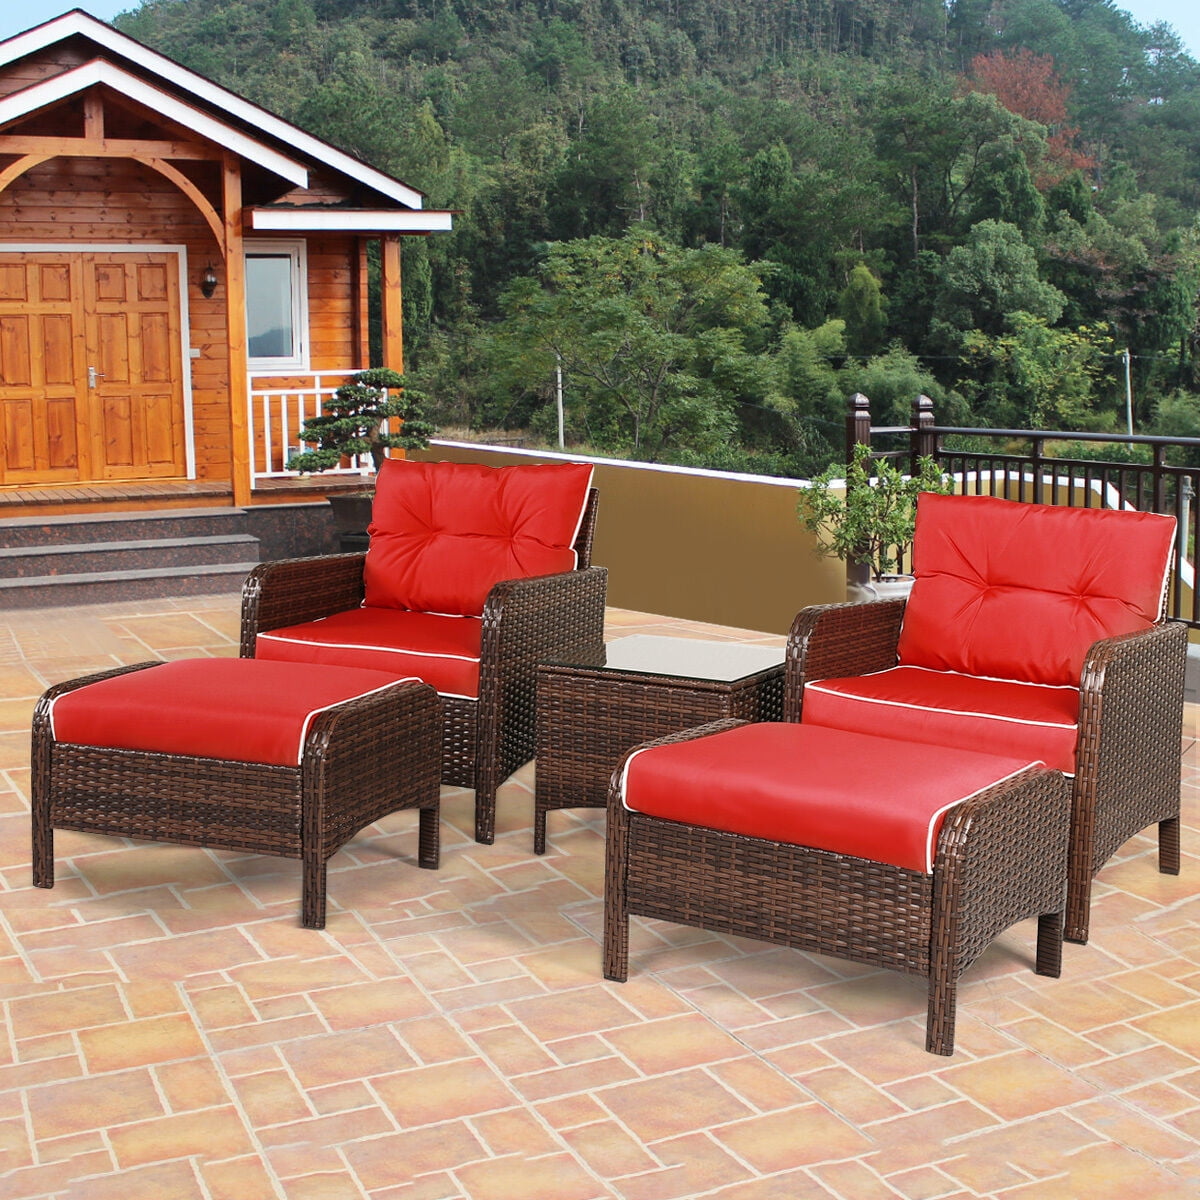 5PCS Patio Rattan Wicker Furniture Set Garden Sofa Ottoman W/ Red